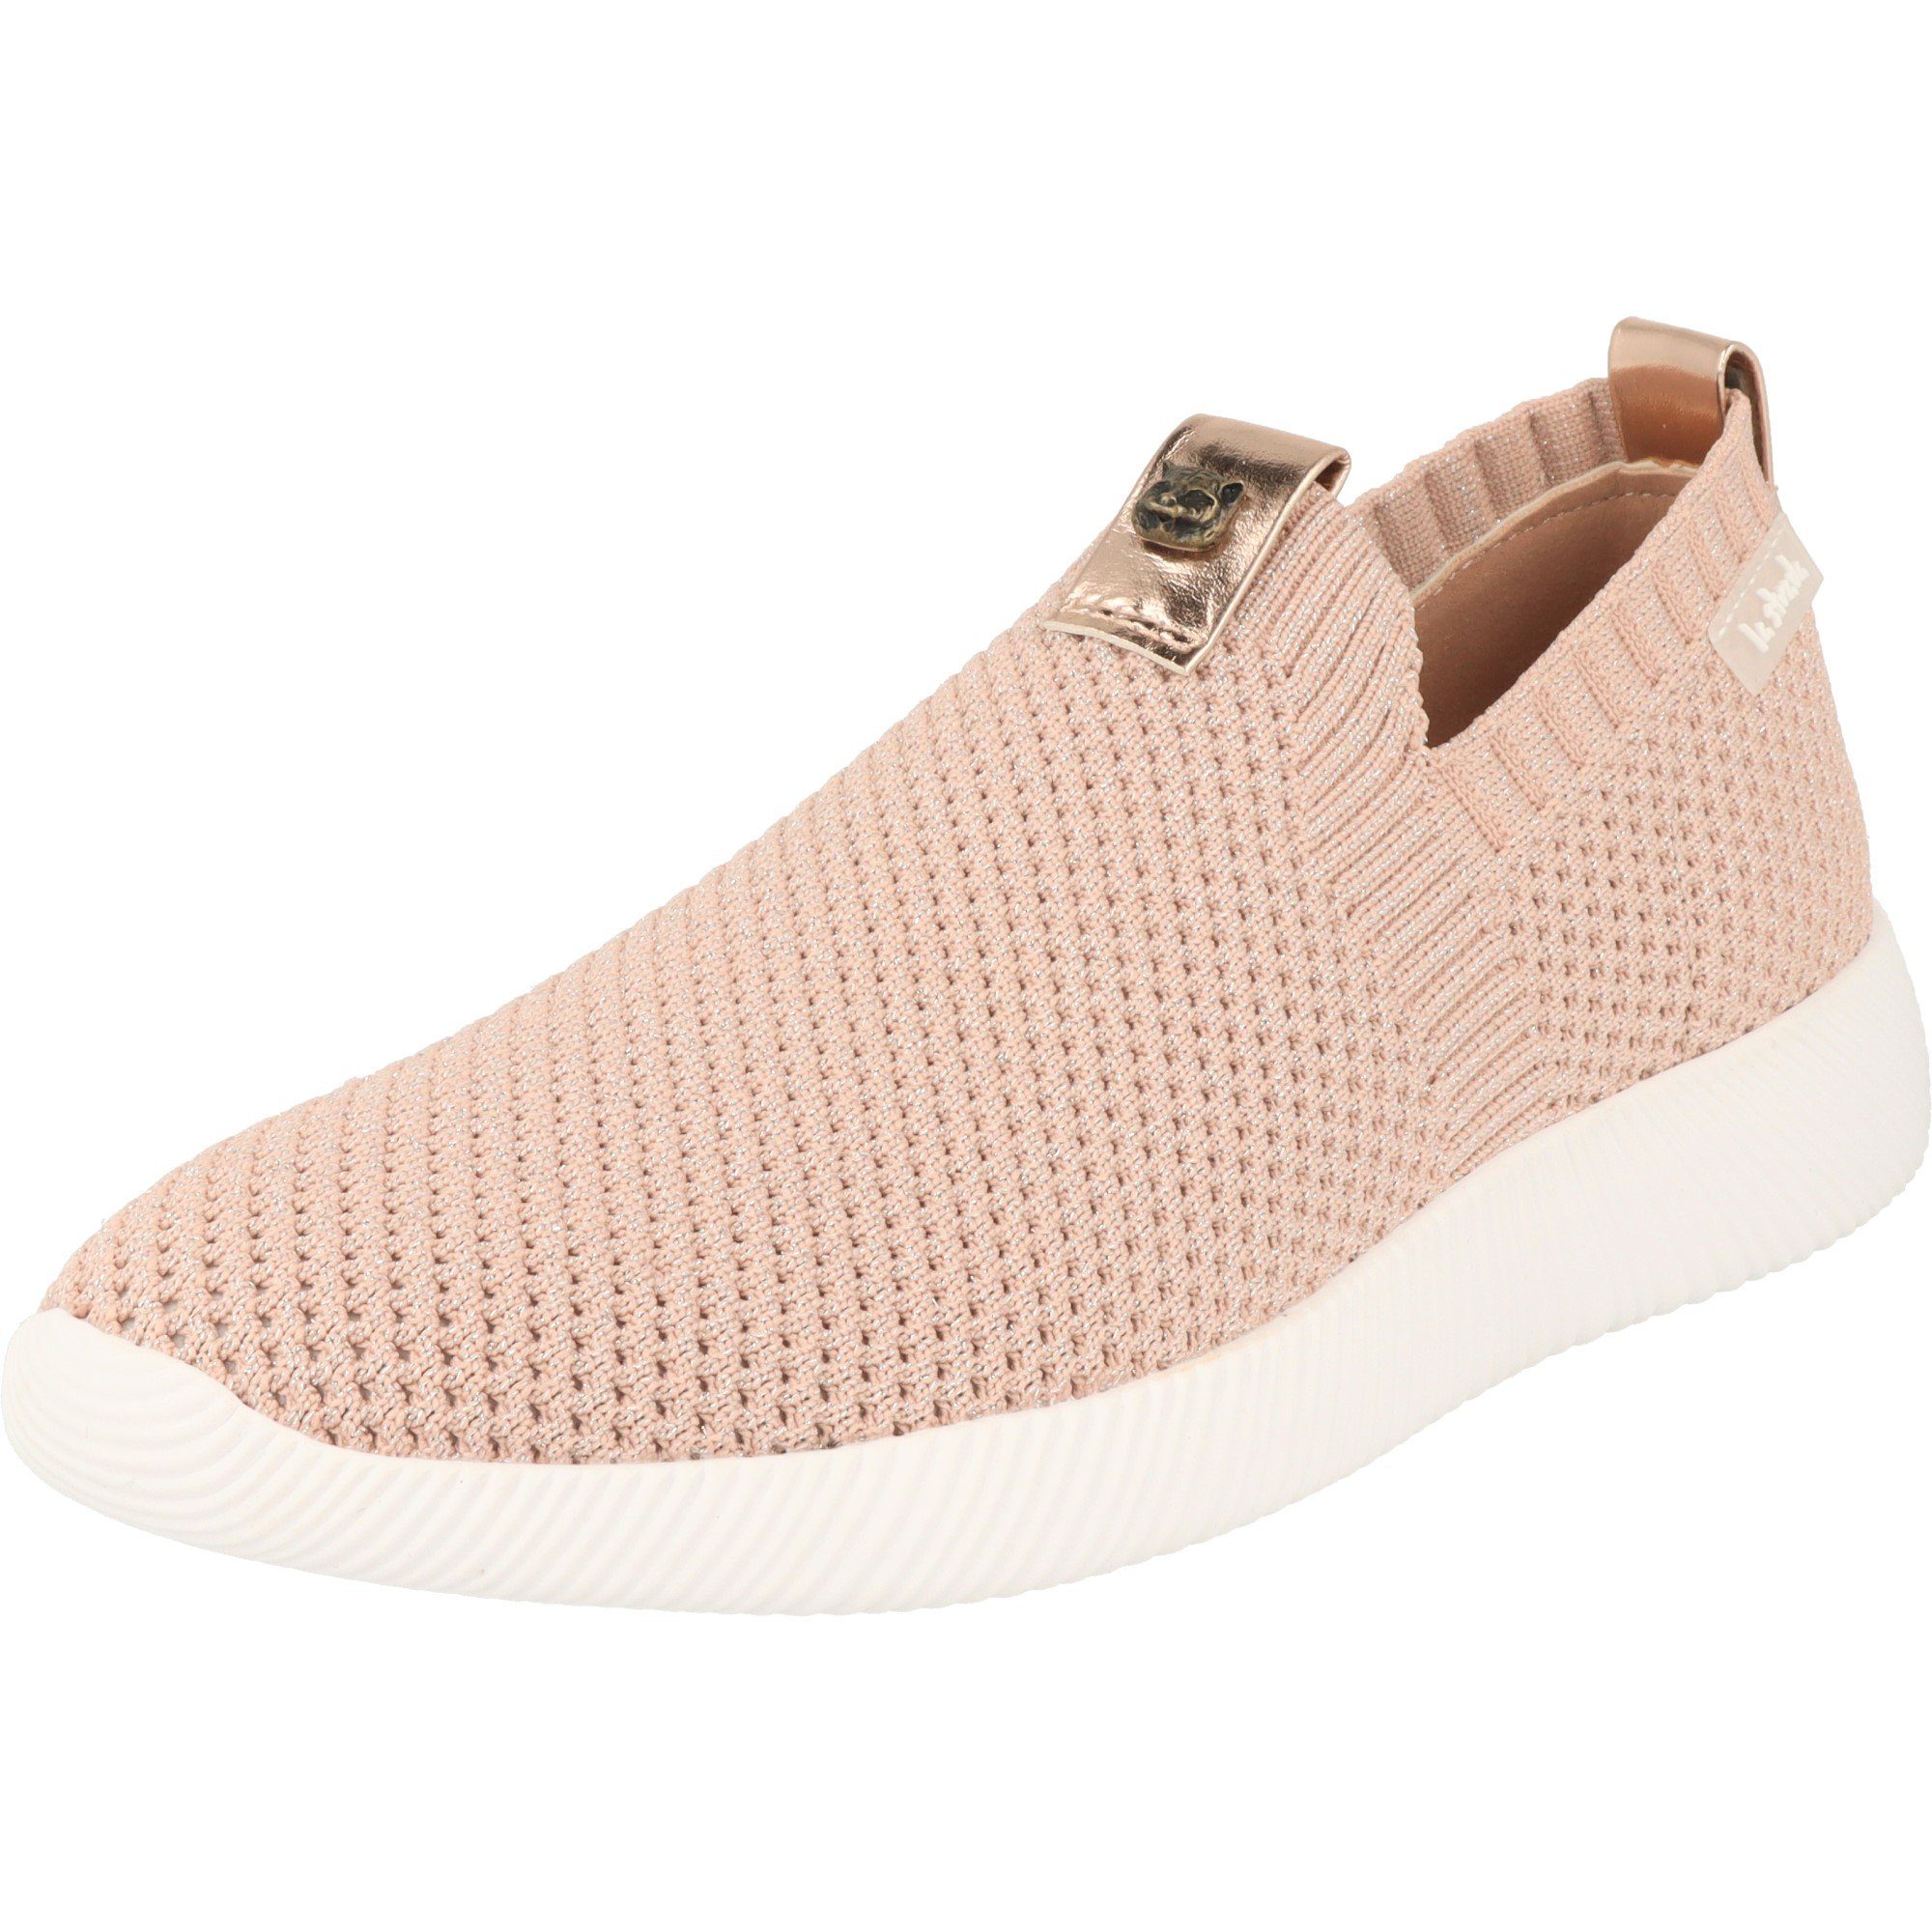 La Strada »Damen Schuhe Halbschuhe Slipper Sneaker 2101280-4523  Rosa/Silver« Slipper online kaufen | OTTO